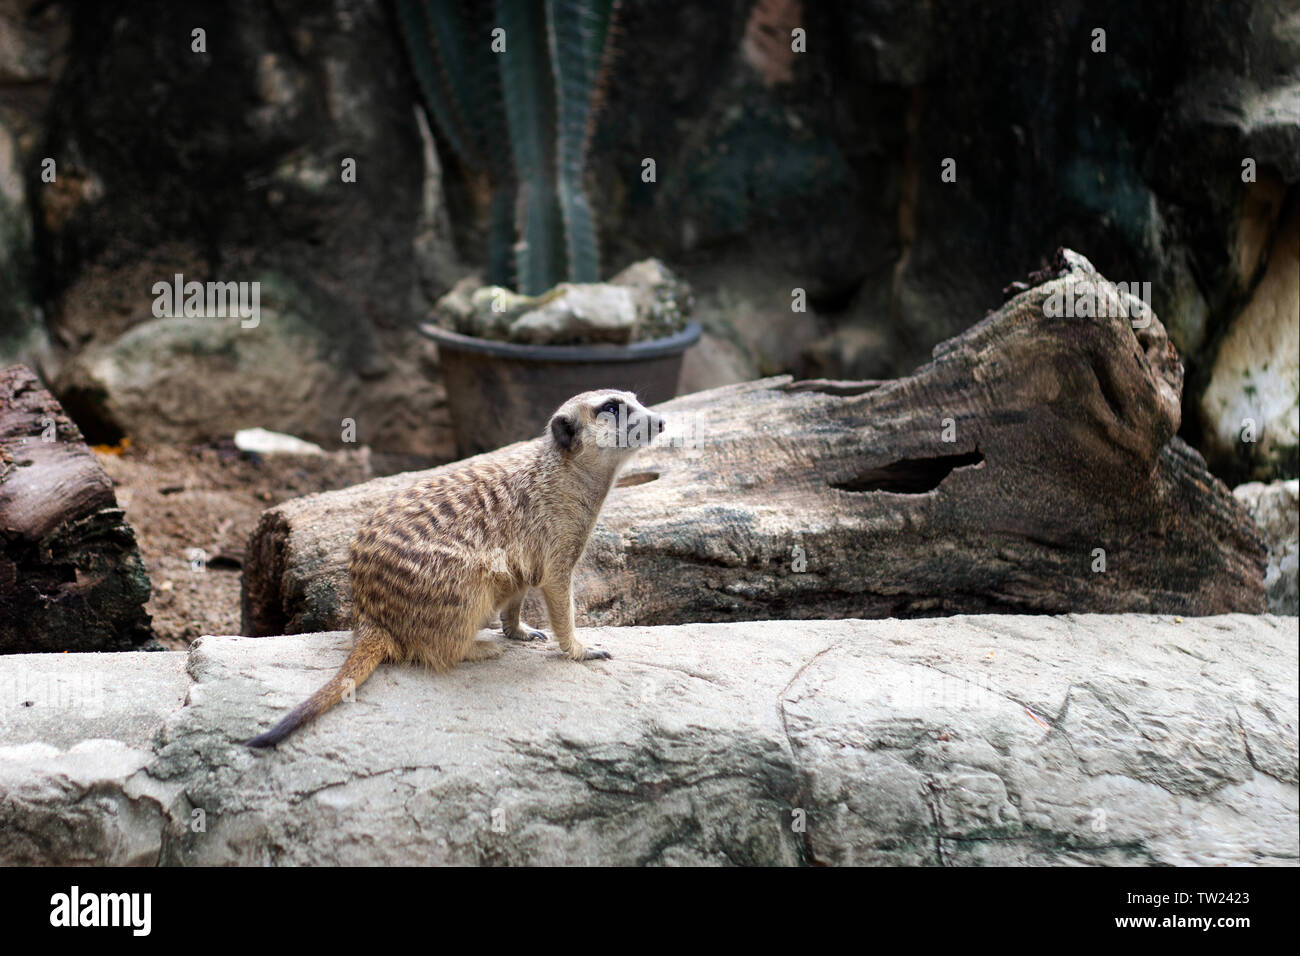 standing small meerkat at zoo in wildlife animal photo. Stock Photo